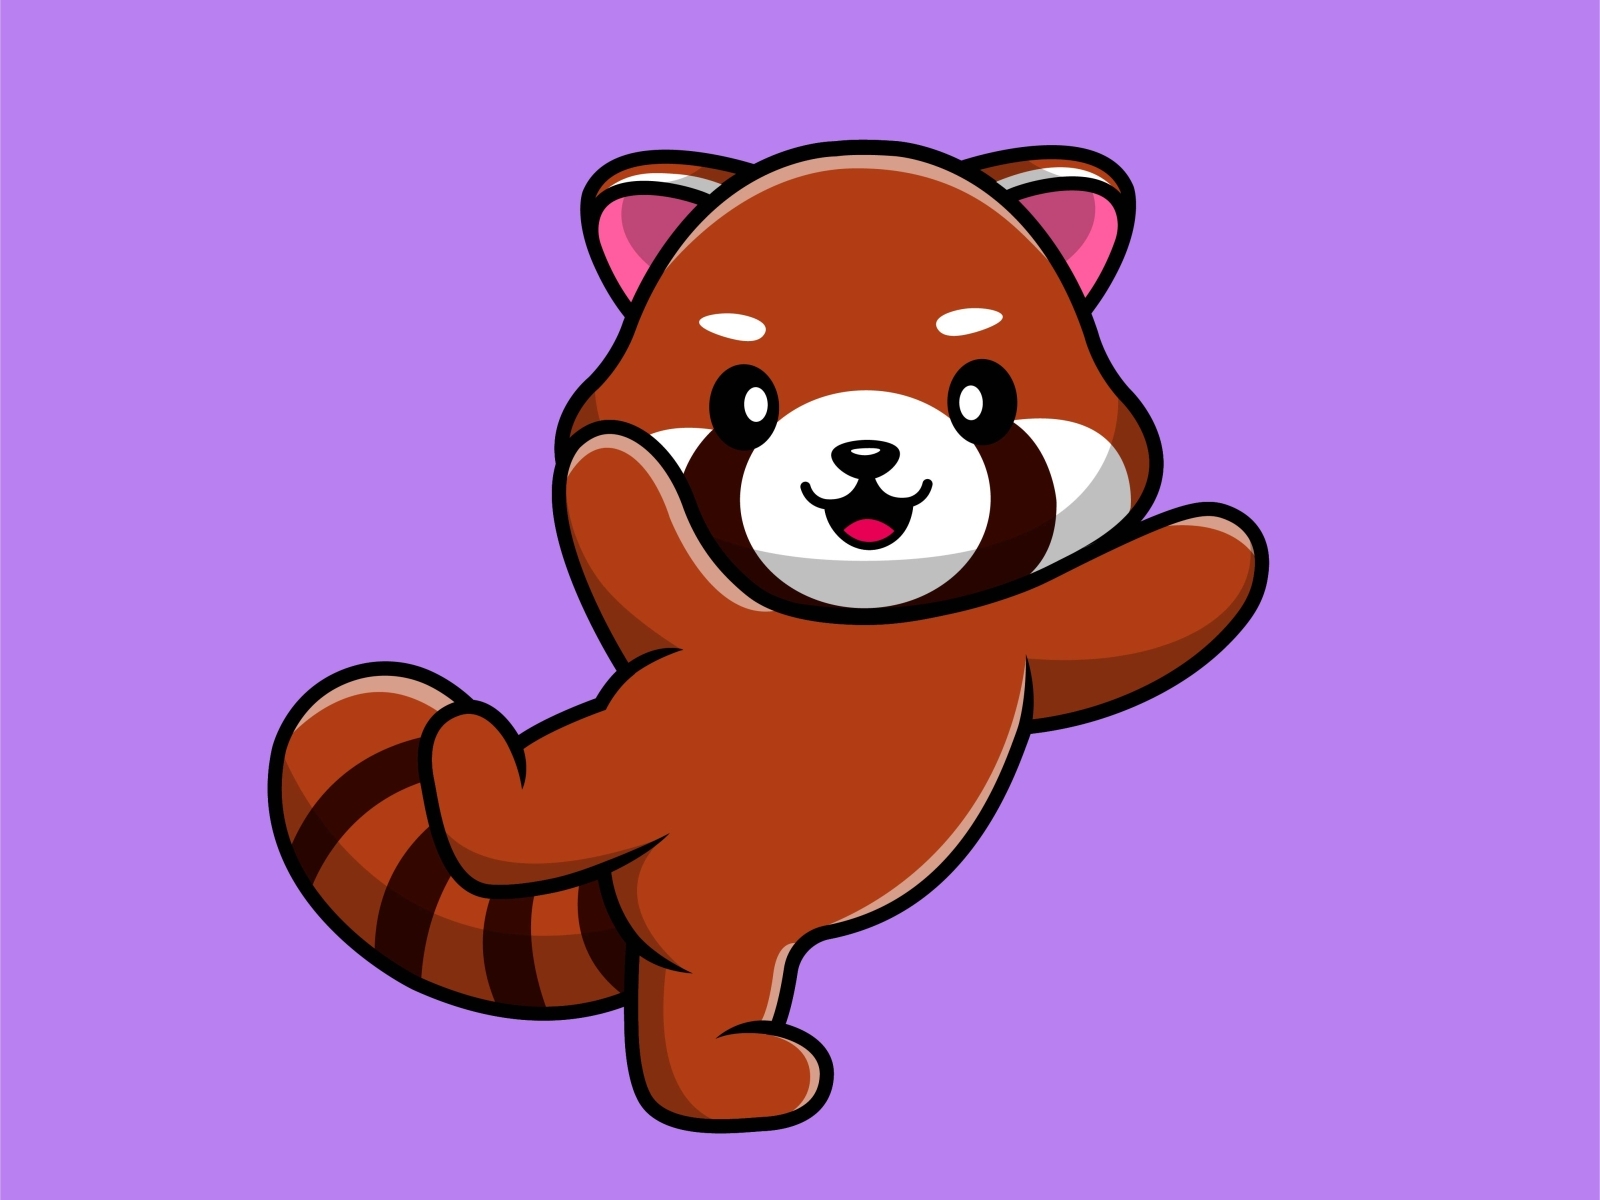 Cute Red Panda by Moksha Labs on Dribbble